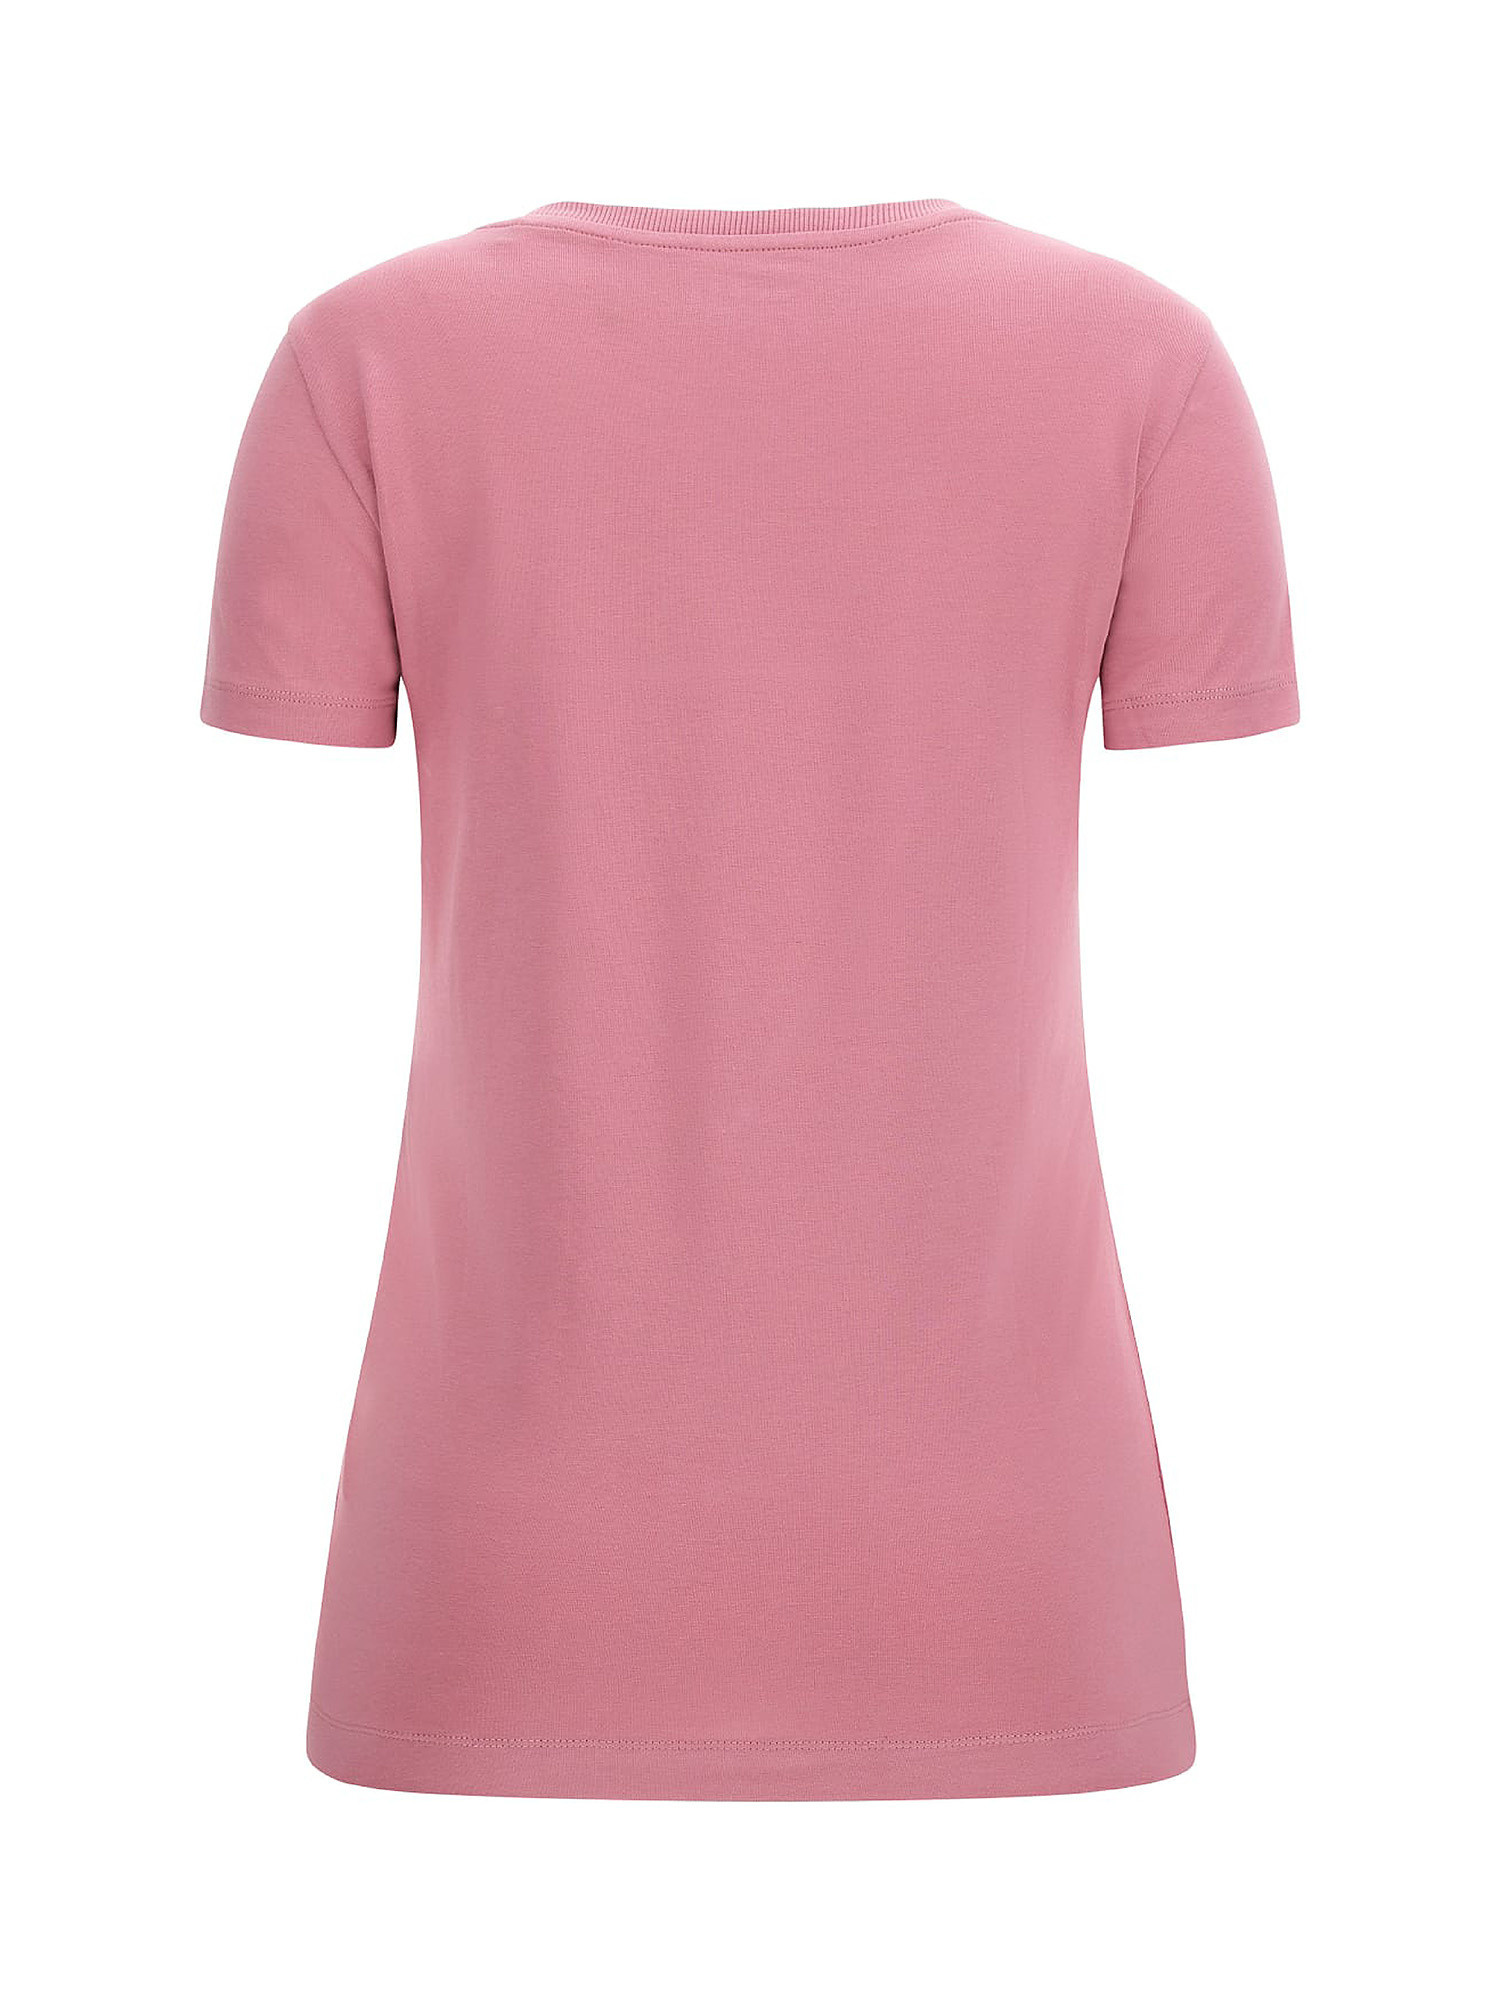 GUESS - Logo T-shirt, Pink, large image number 1